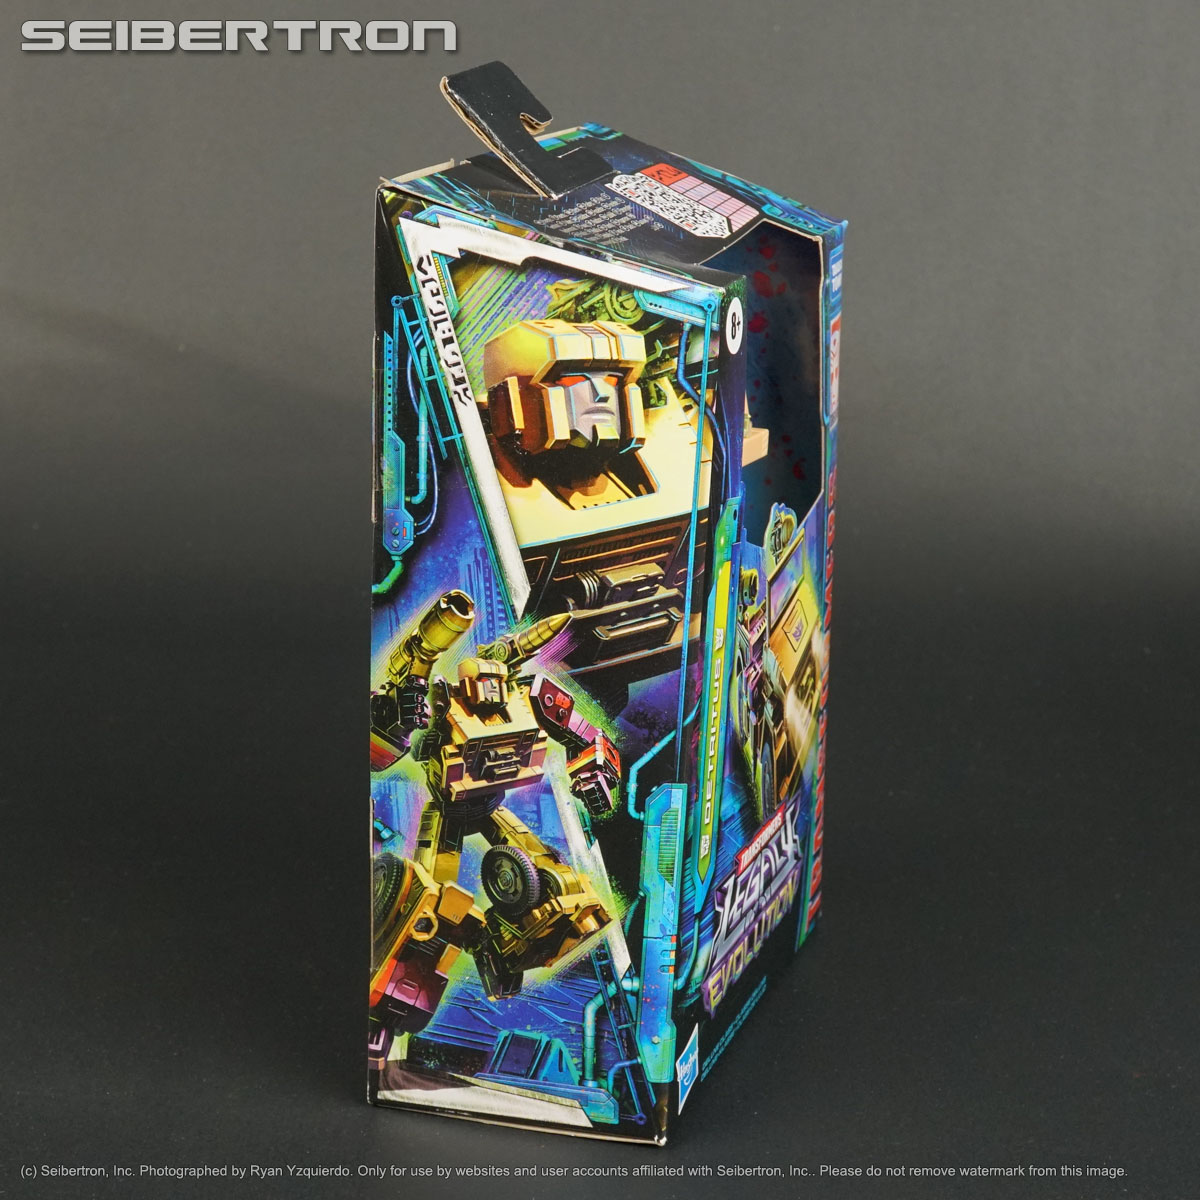 DETRITUS Transformers Legacy Evolution Deluxe Hasbro 2023 New